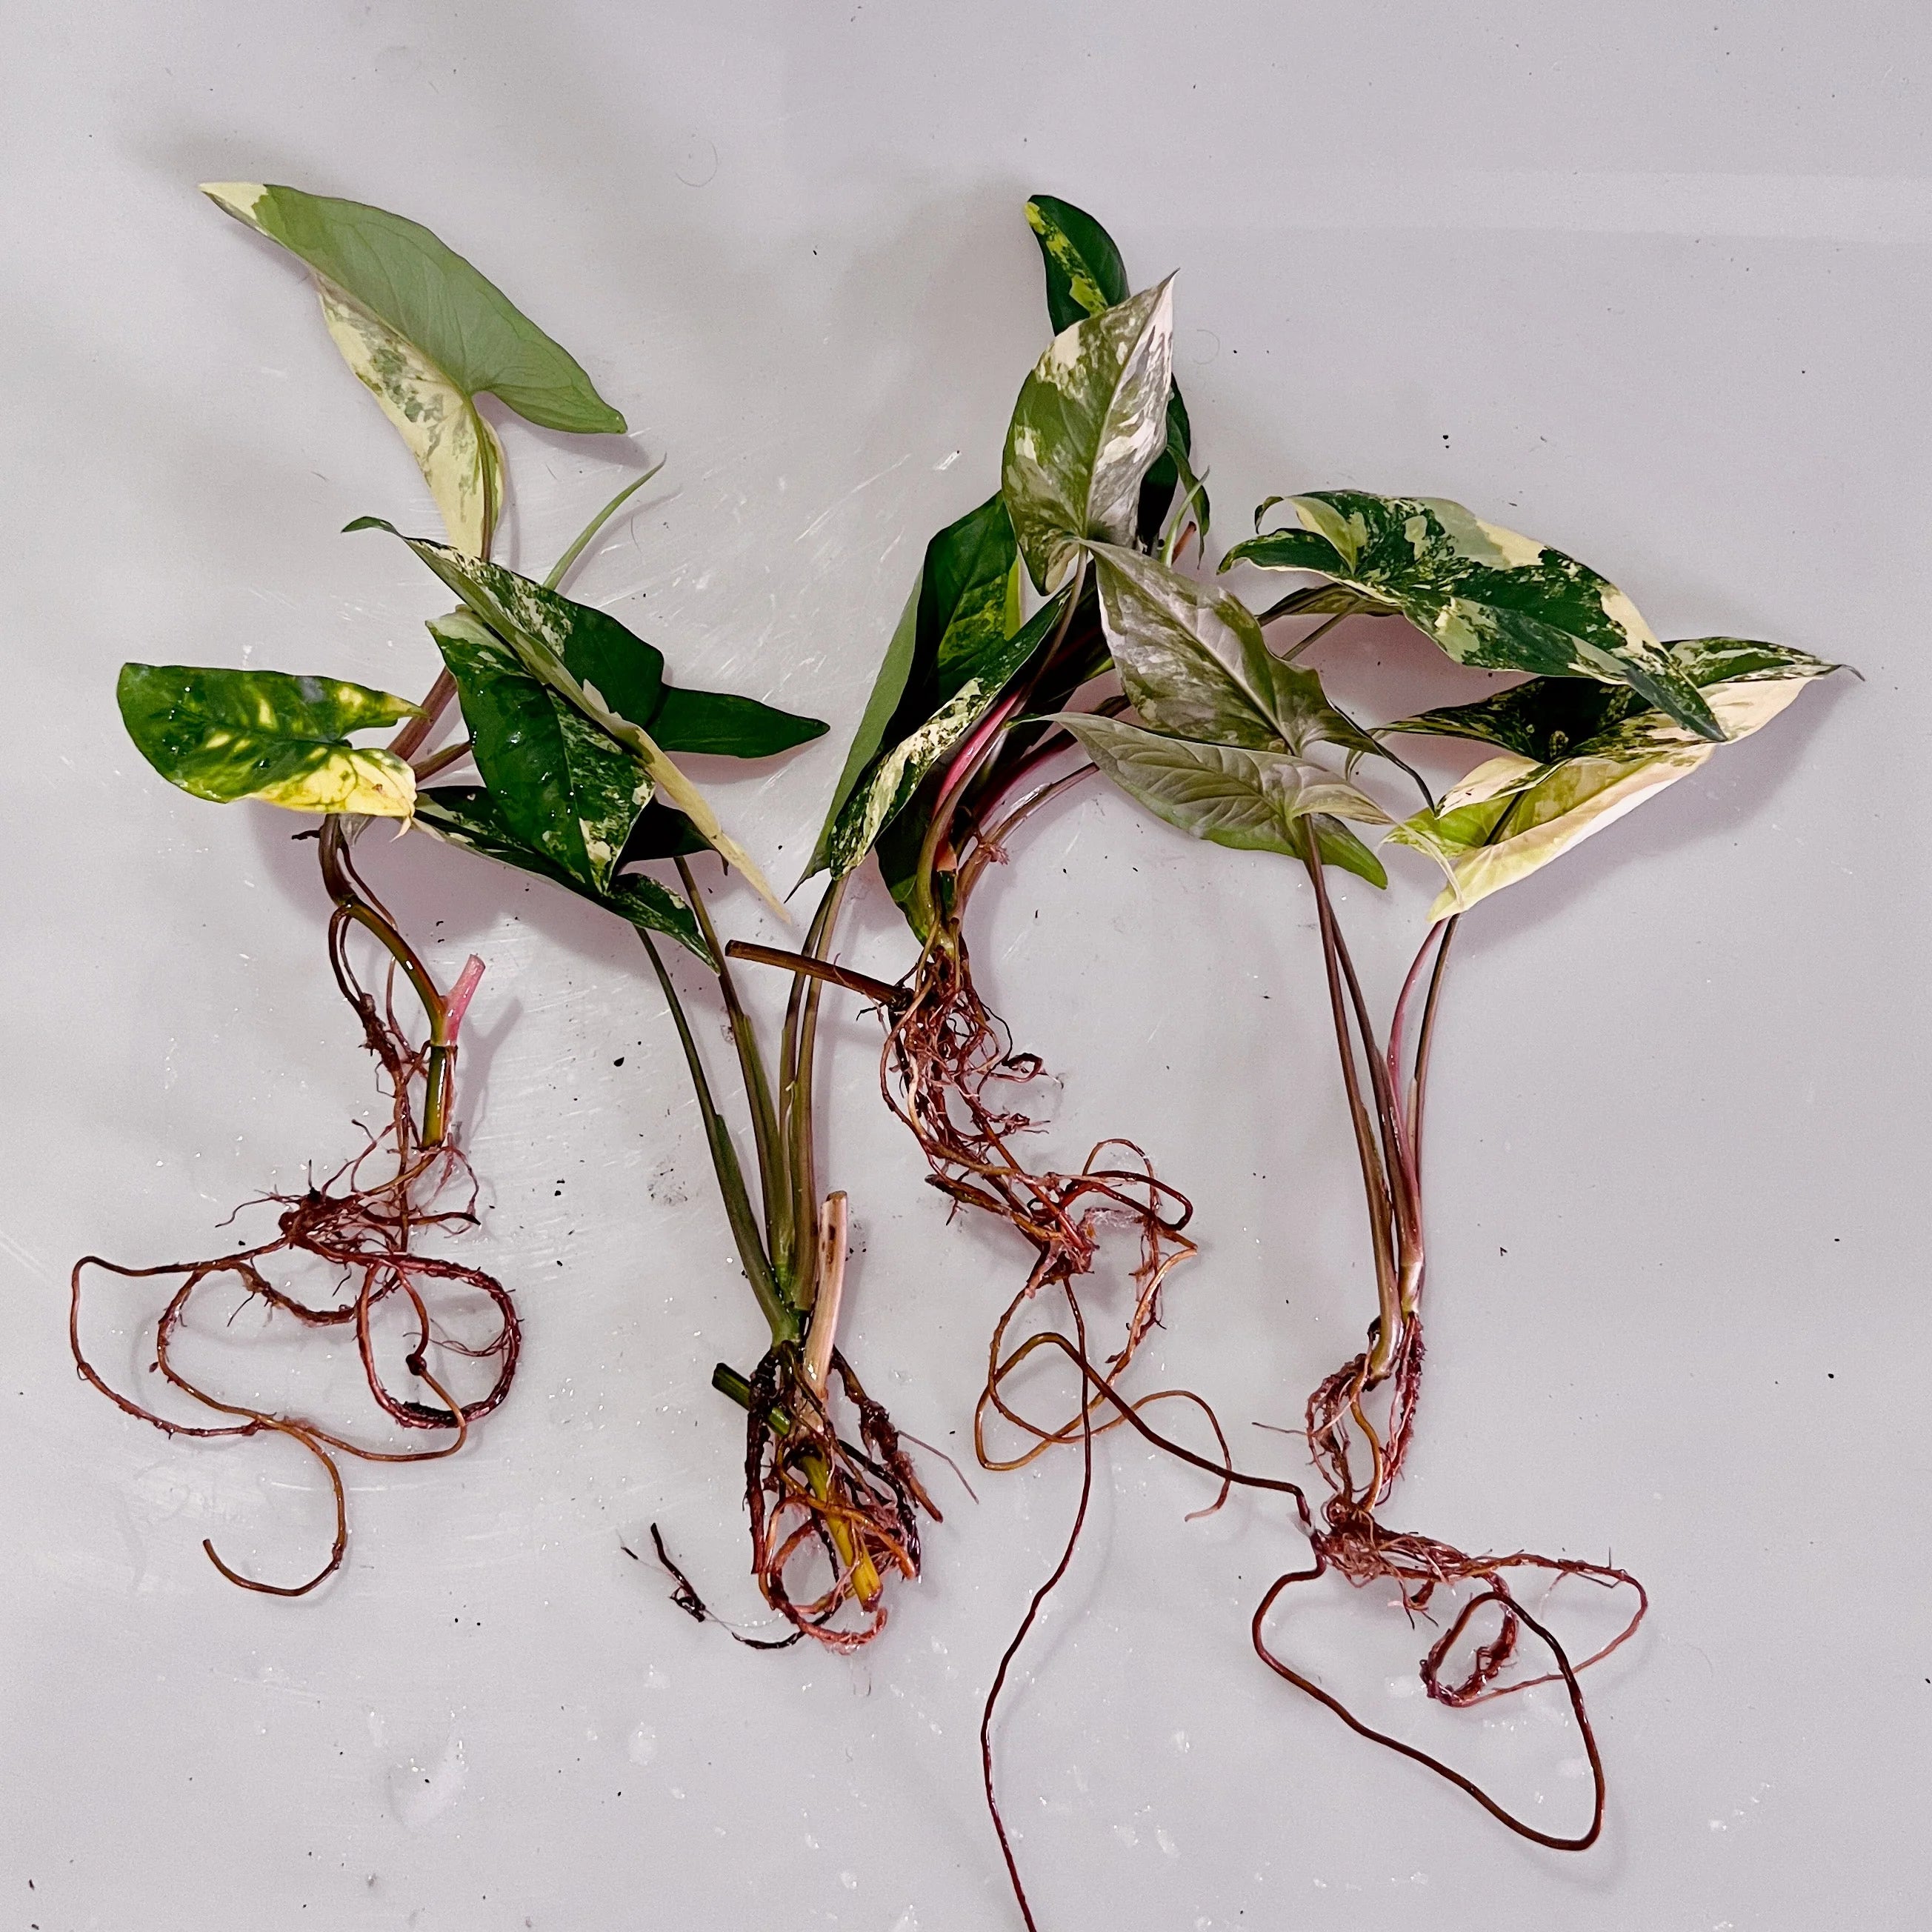 Syngonium aurea bare root plants